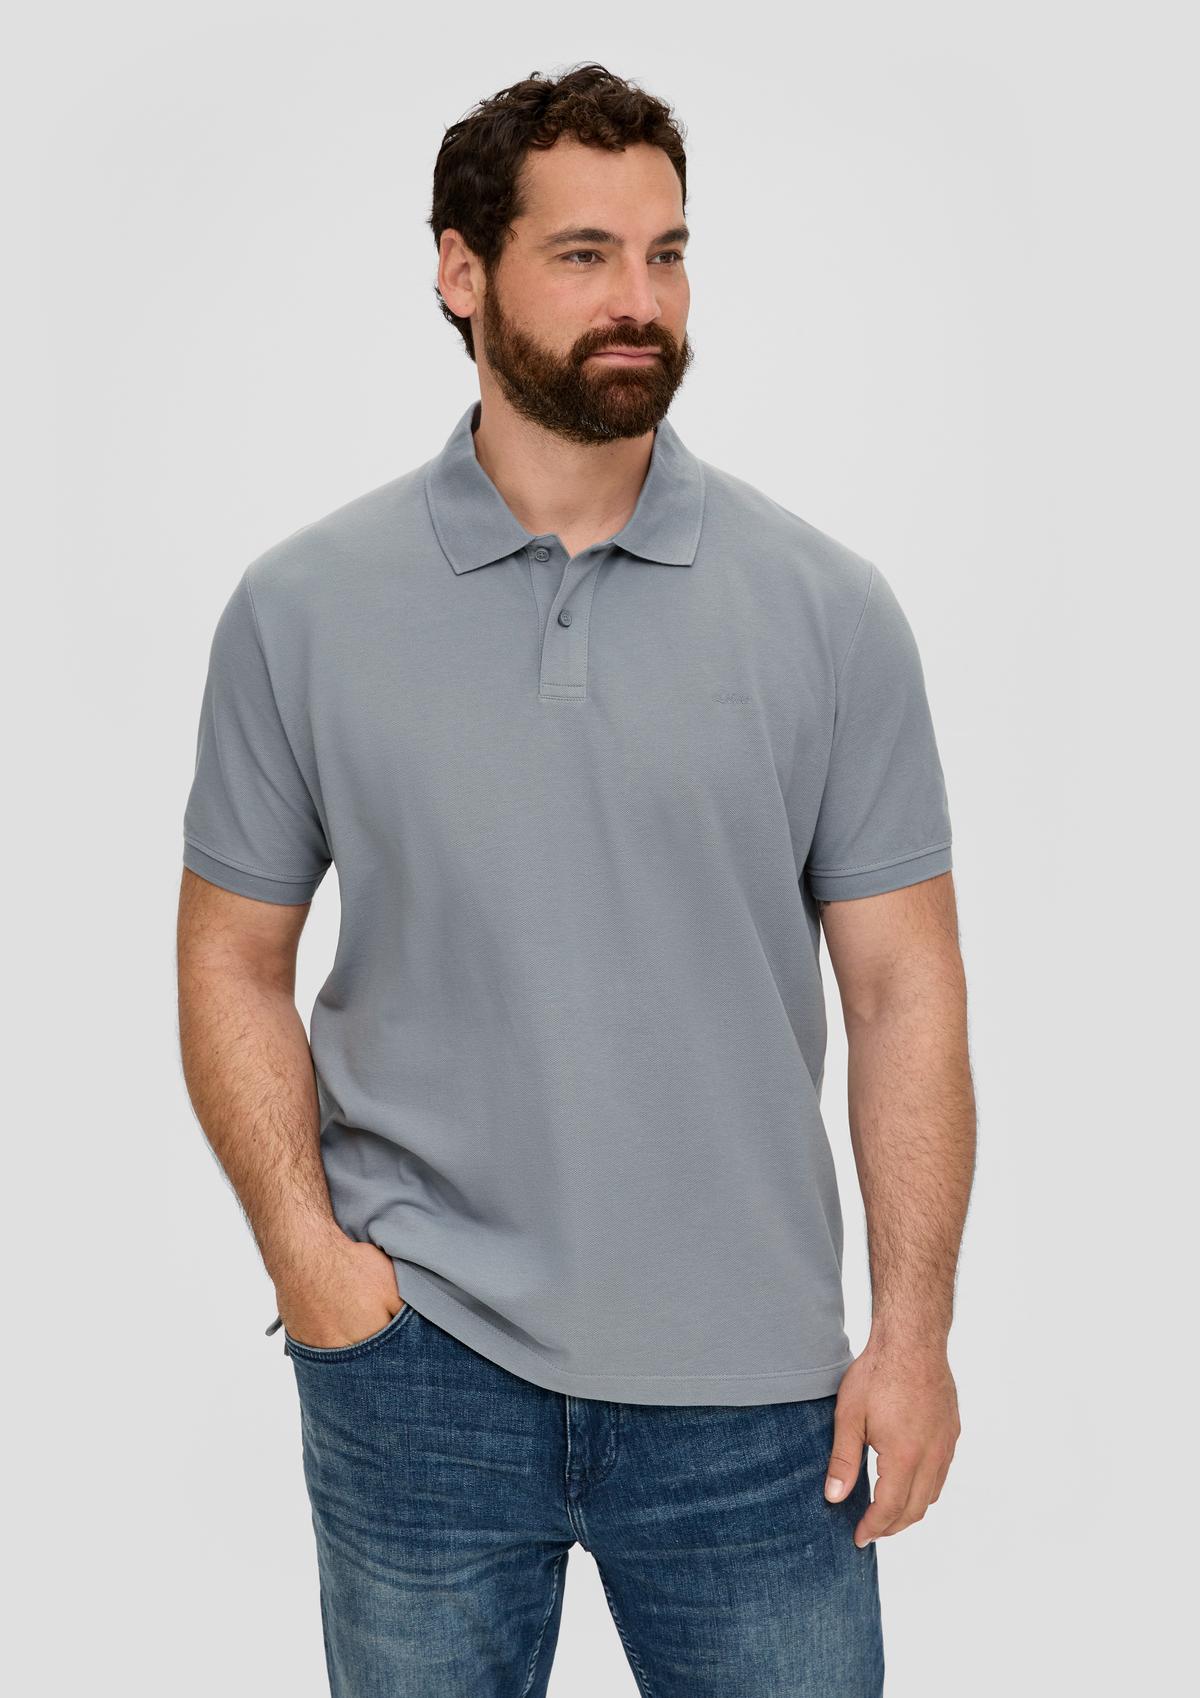 Polo shirt with minimalist navy - print a